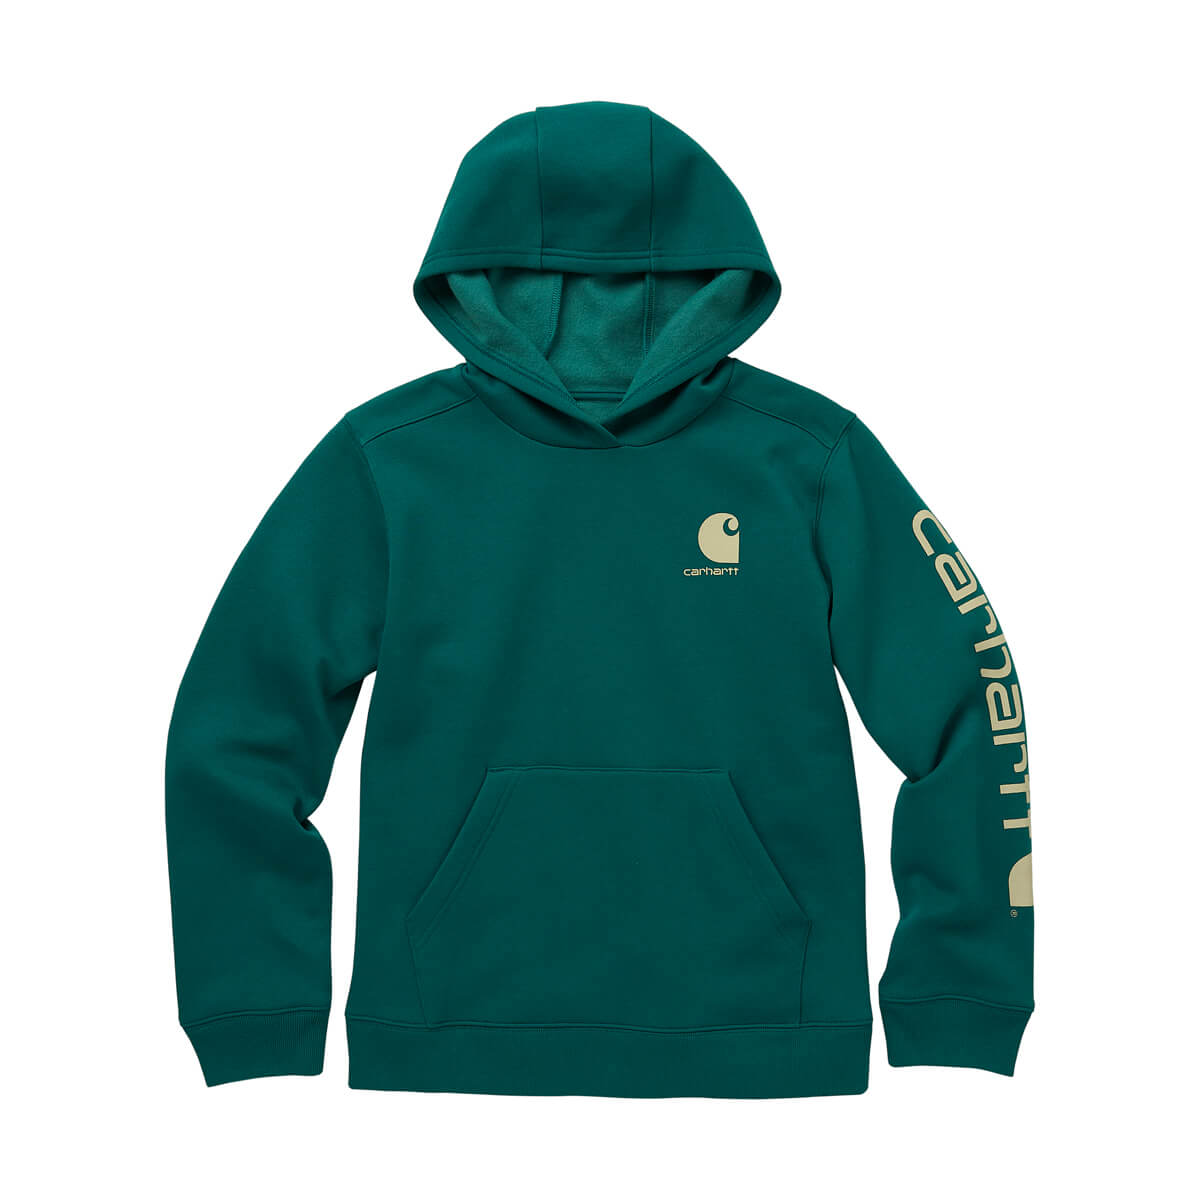 Carhartt Long-Sleeve Graphic Sweatshirt - Green